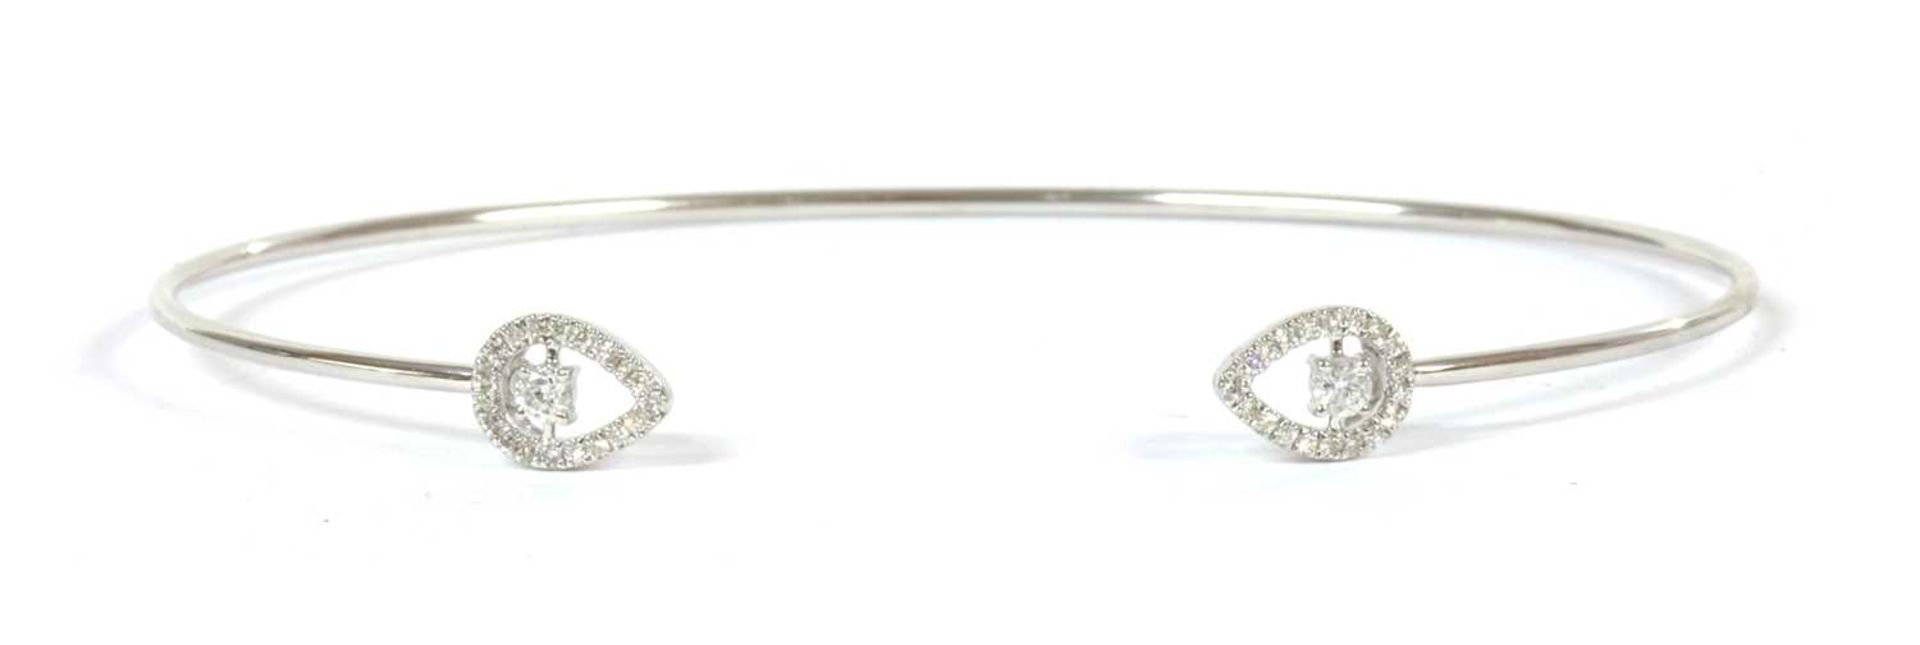 A white gold diamond torque bangle,